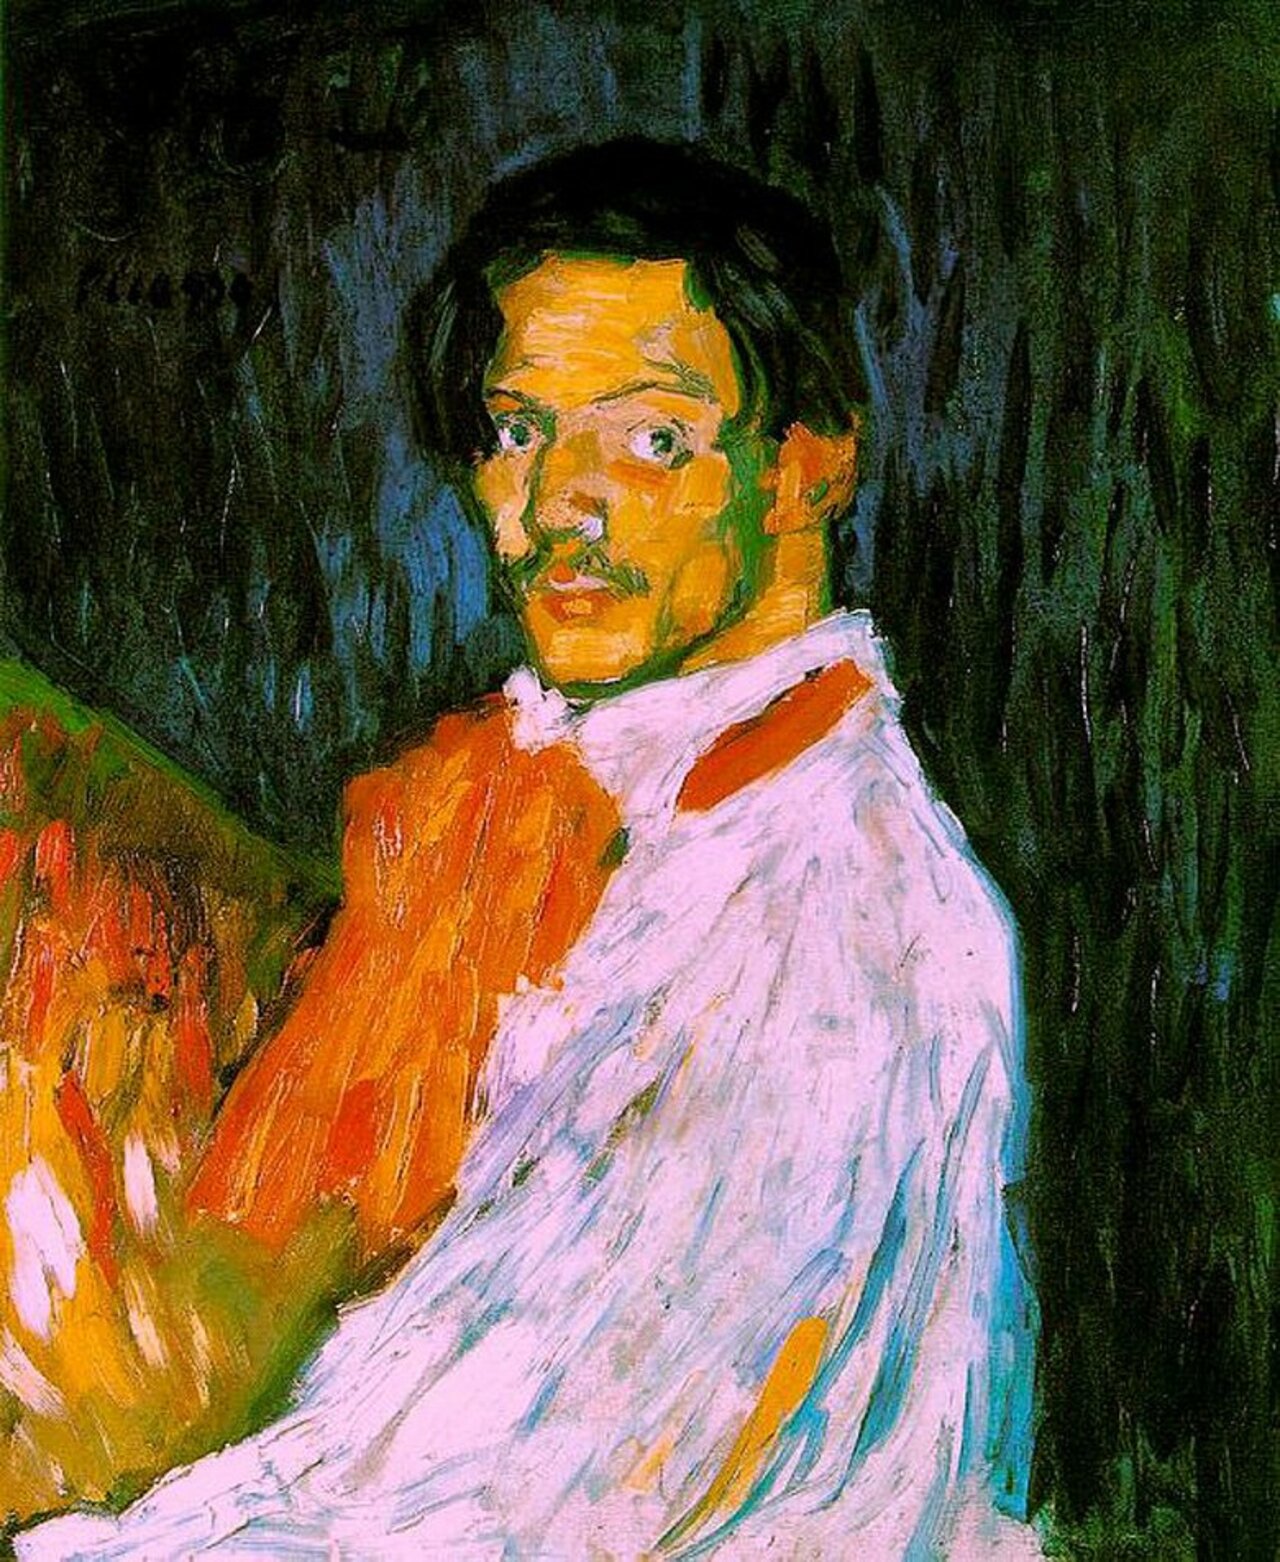 Self-Portrait #impressionism #picasso https://t.co/bOrcYGRUHd